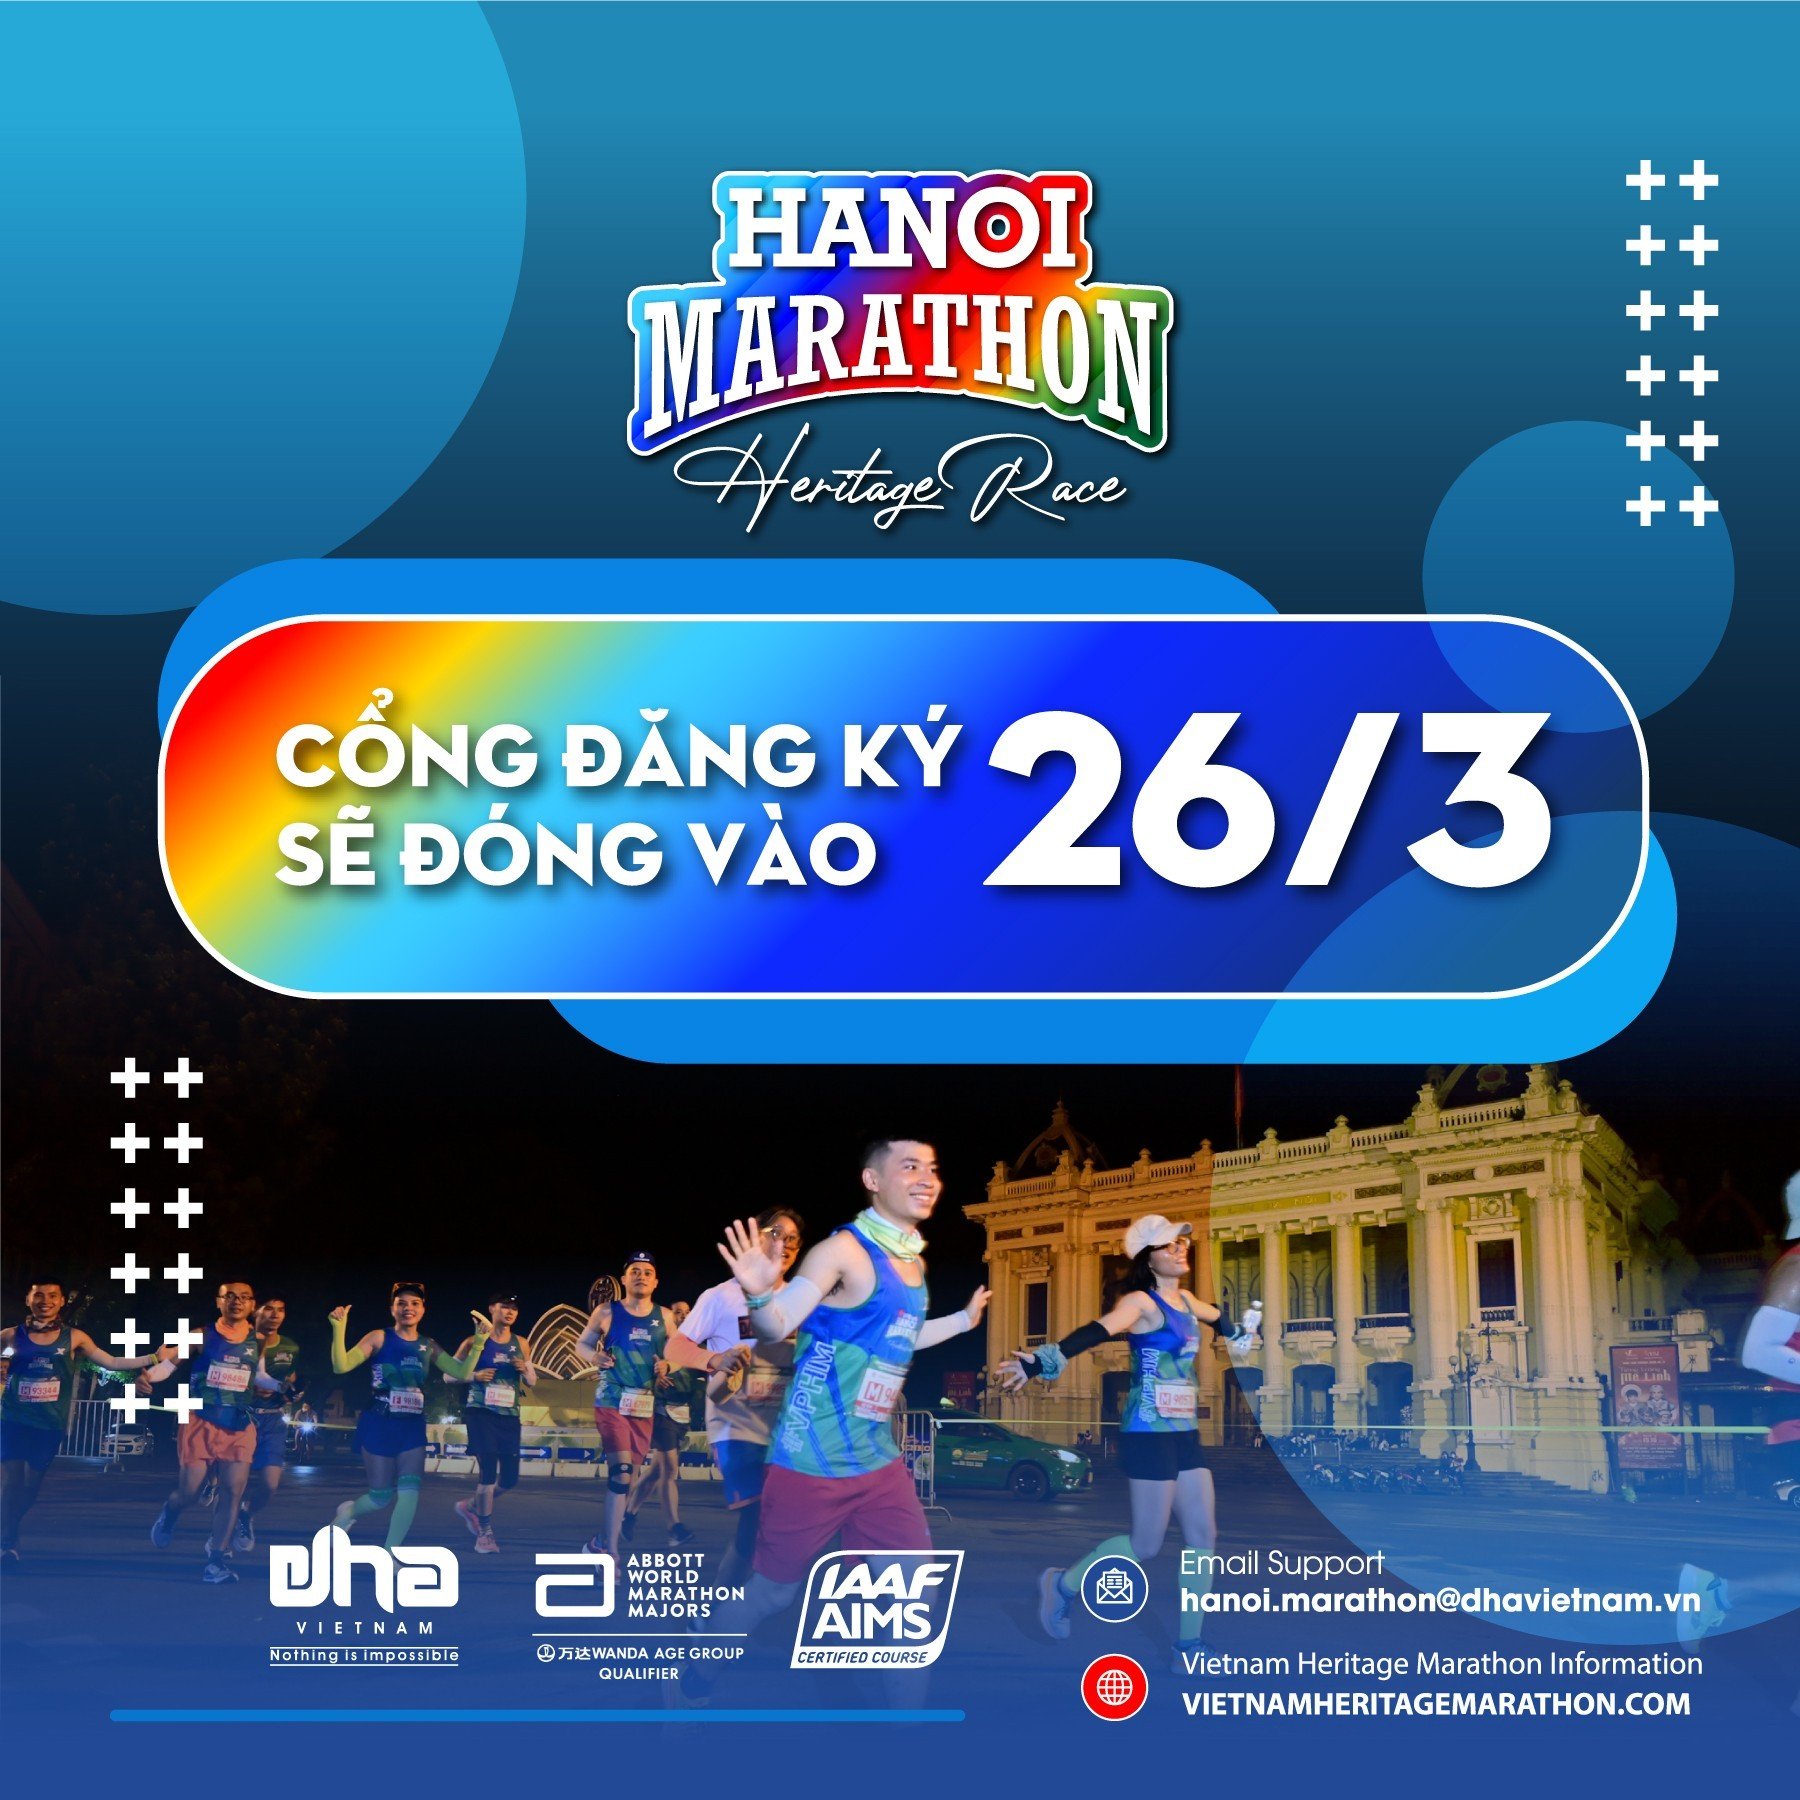 Hanoi Marathon-Heritage Race To End Registration, Extend Offers